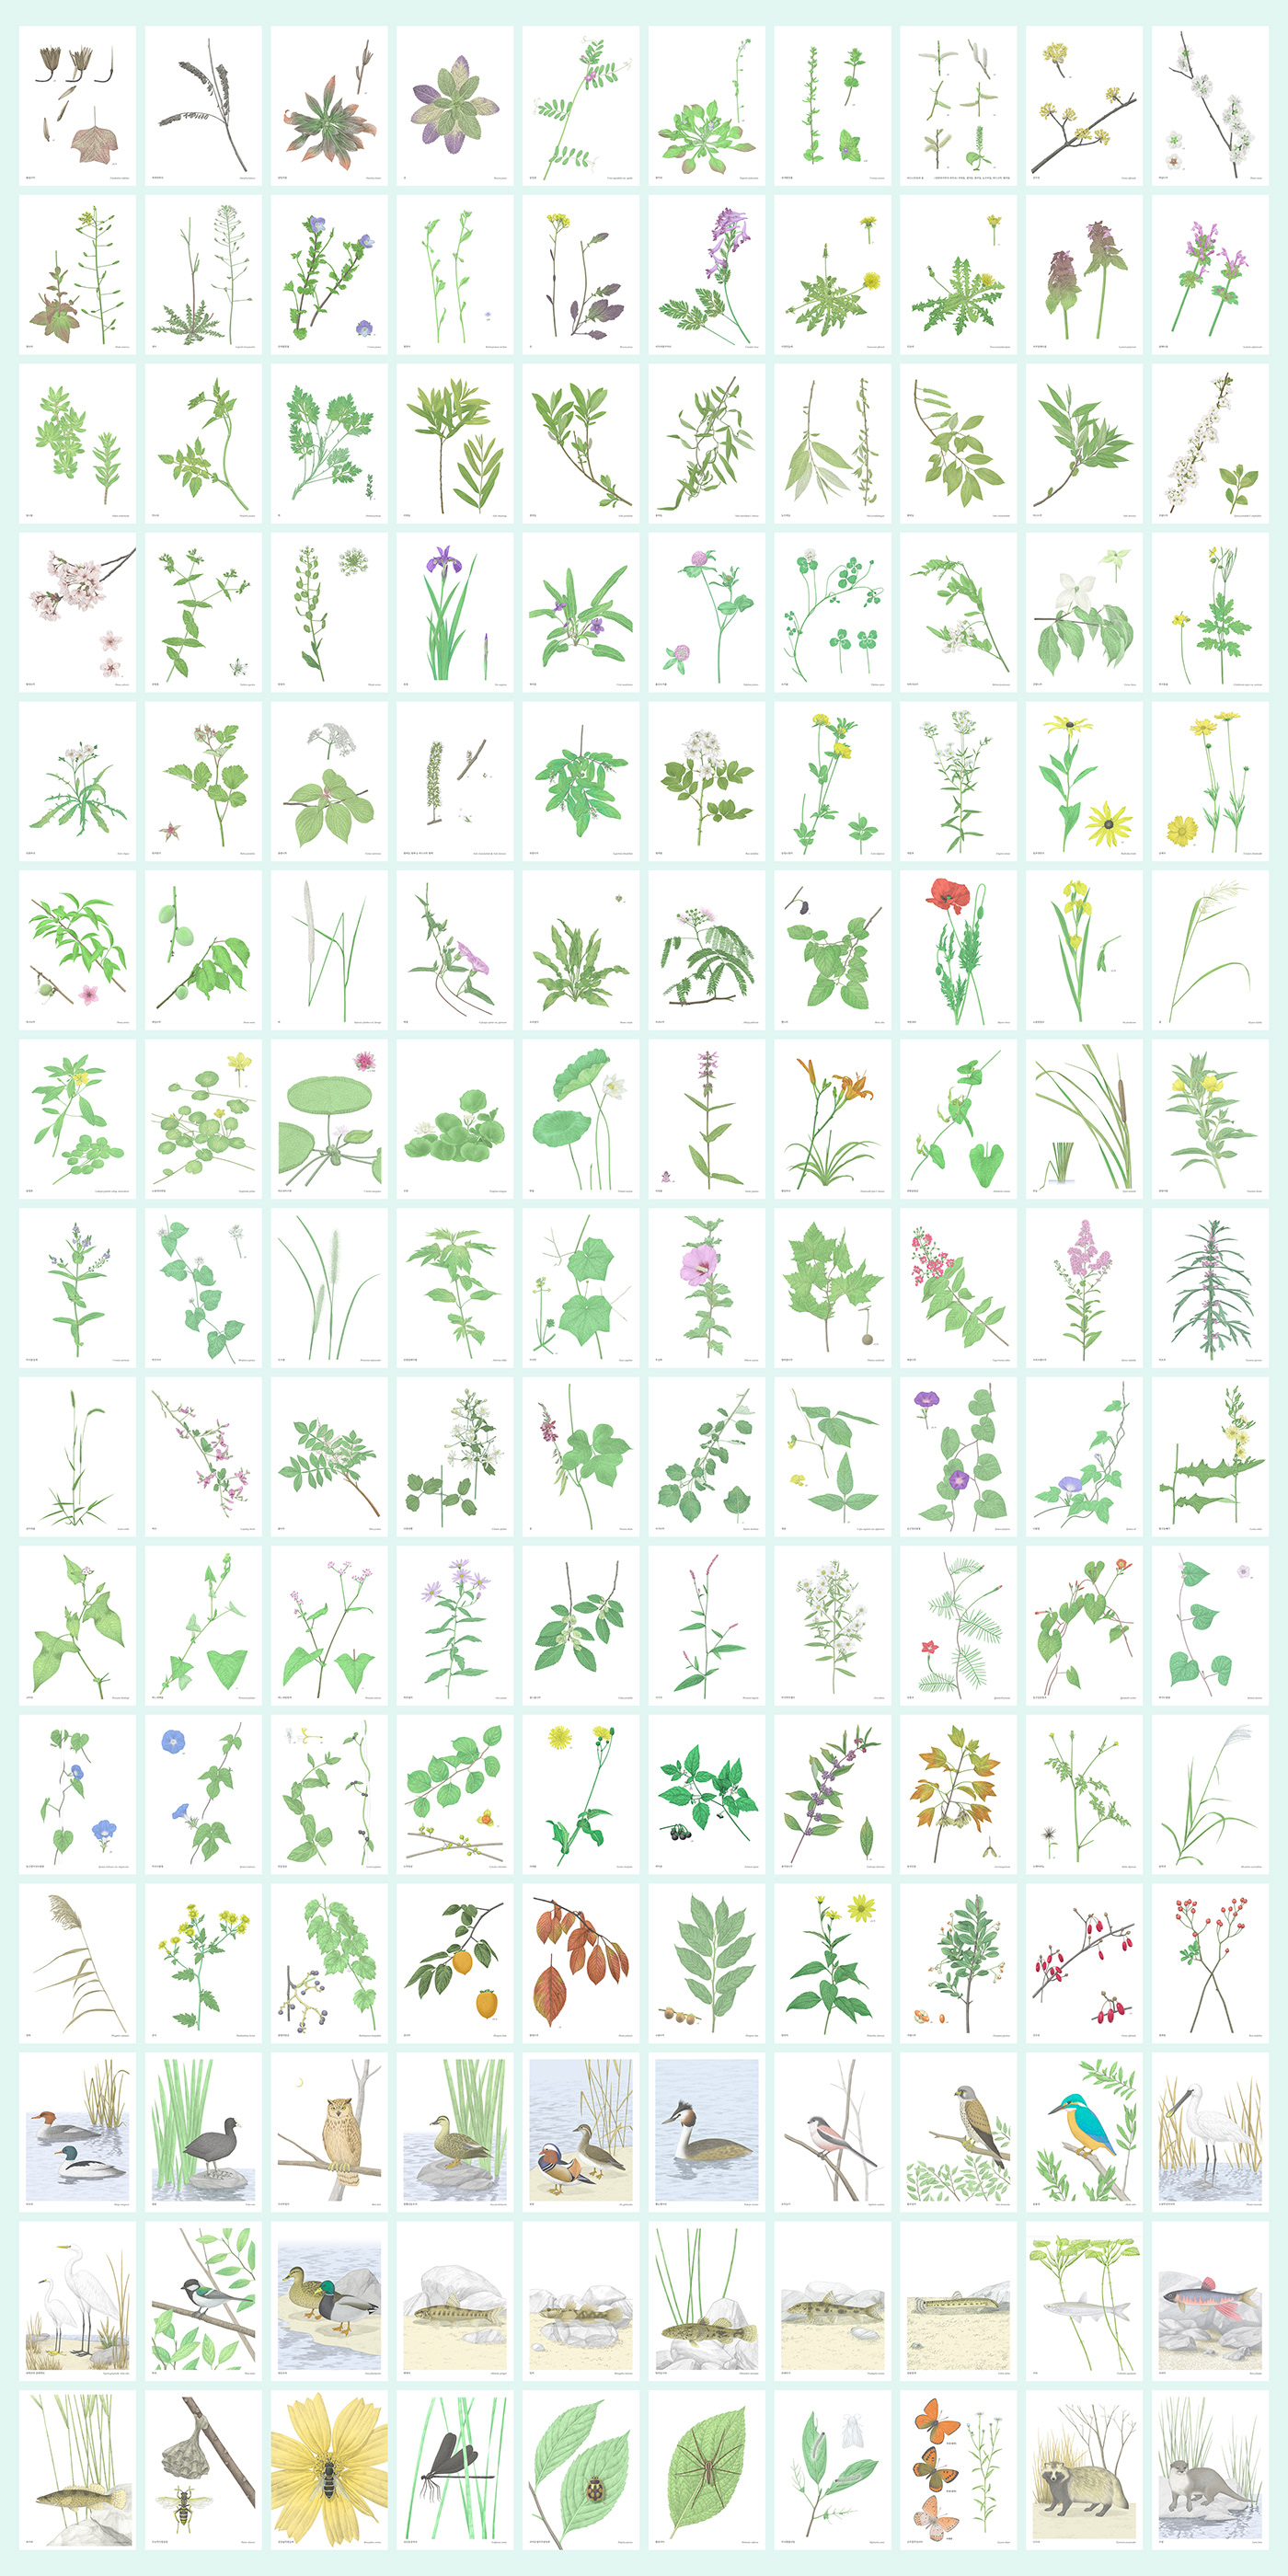 animal book botany detail dictionary eco life Miniature Plant taxonomy